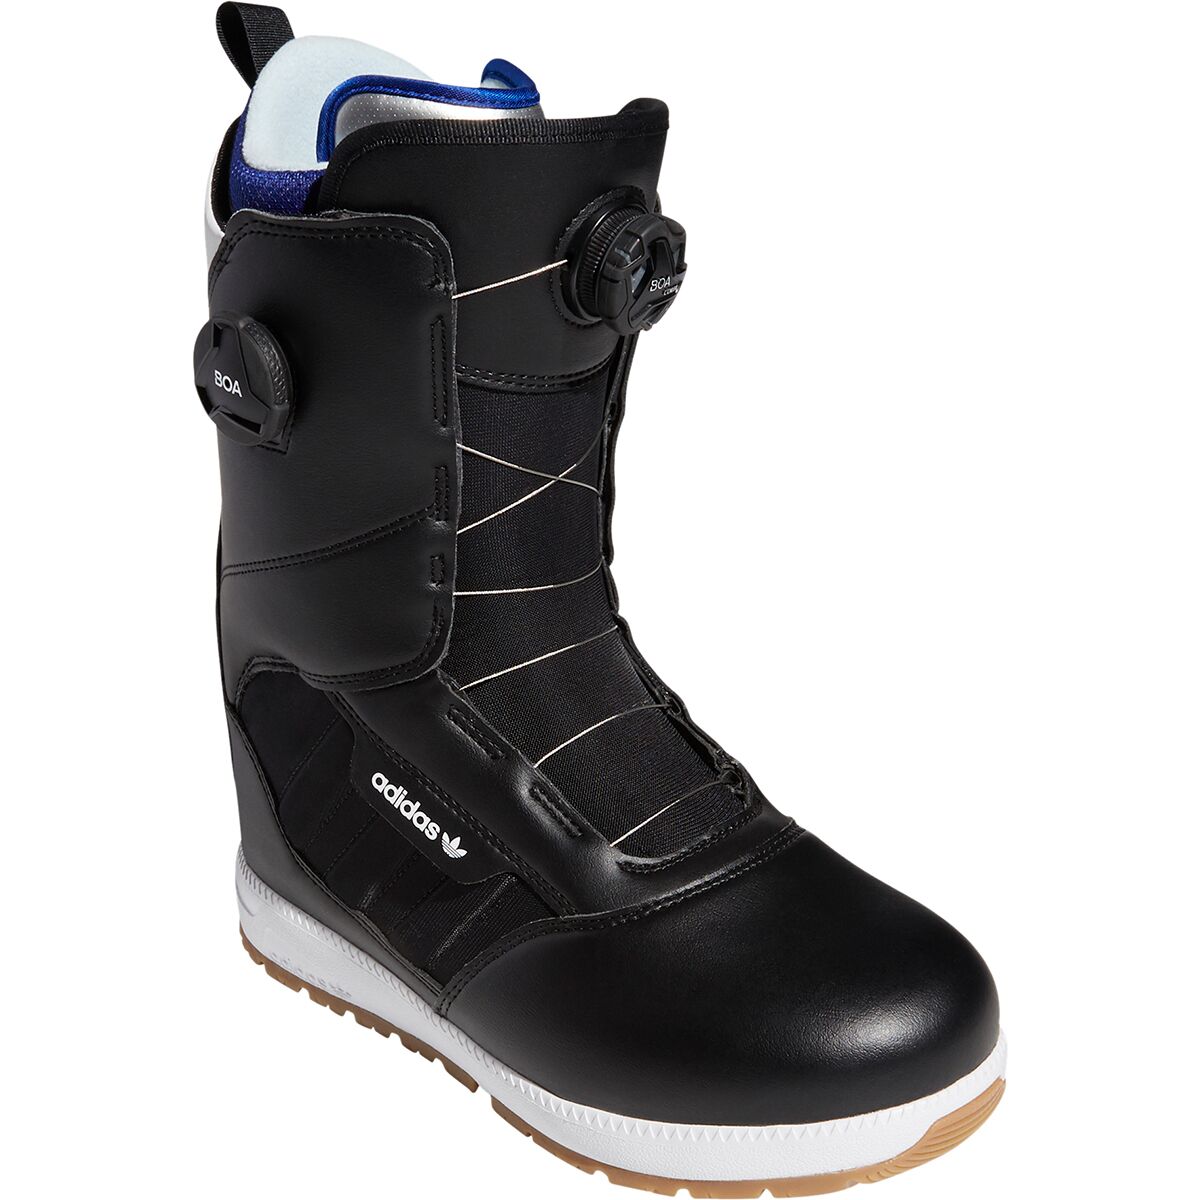 adidas response 3mc adv snowboard boots